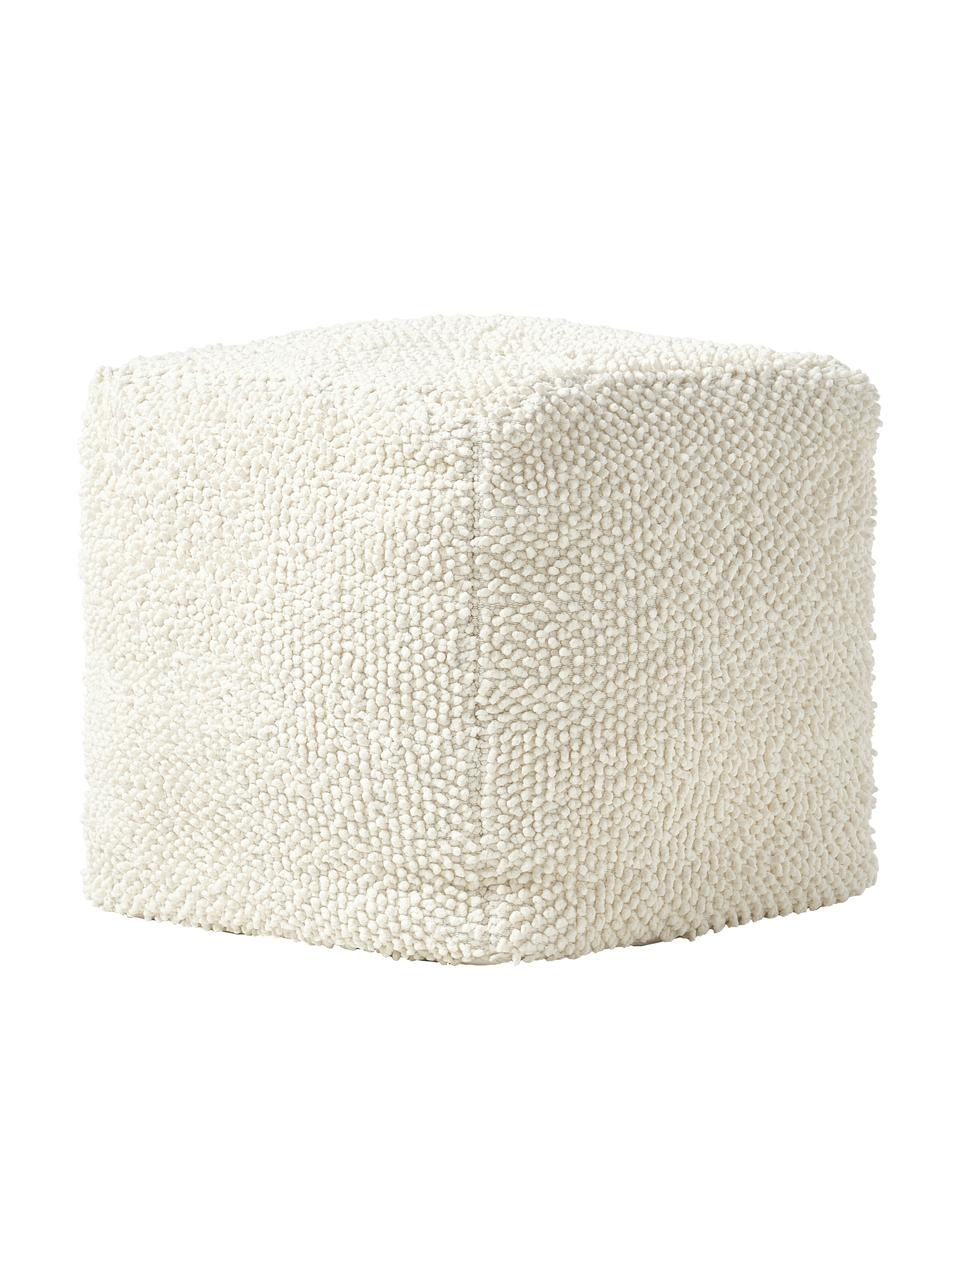 Puf de algodón Indi, Funda: 100% algodón, Blanco, An 45 x Al 45 cm